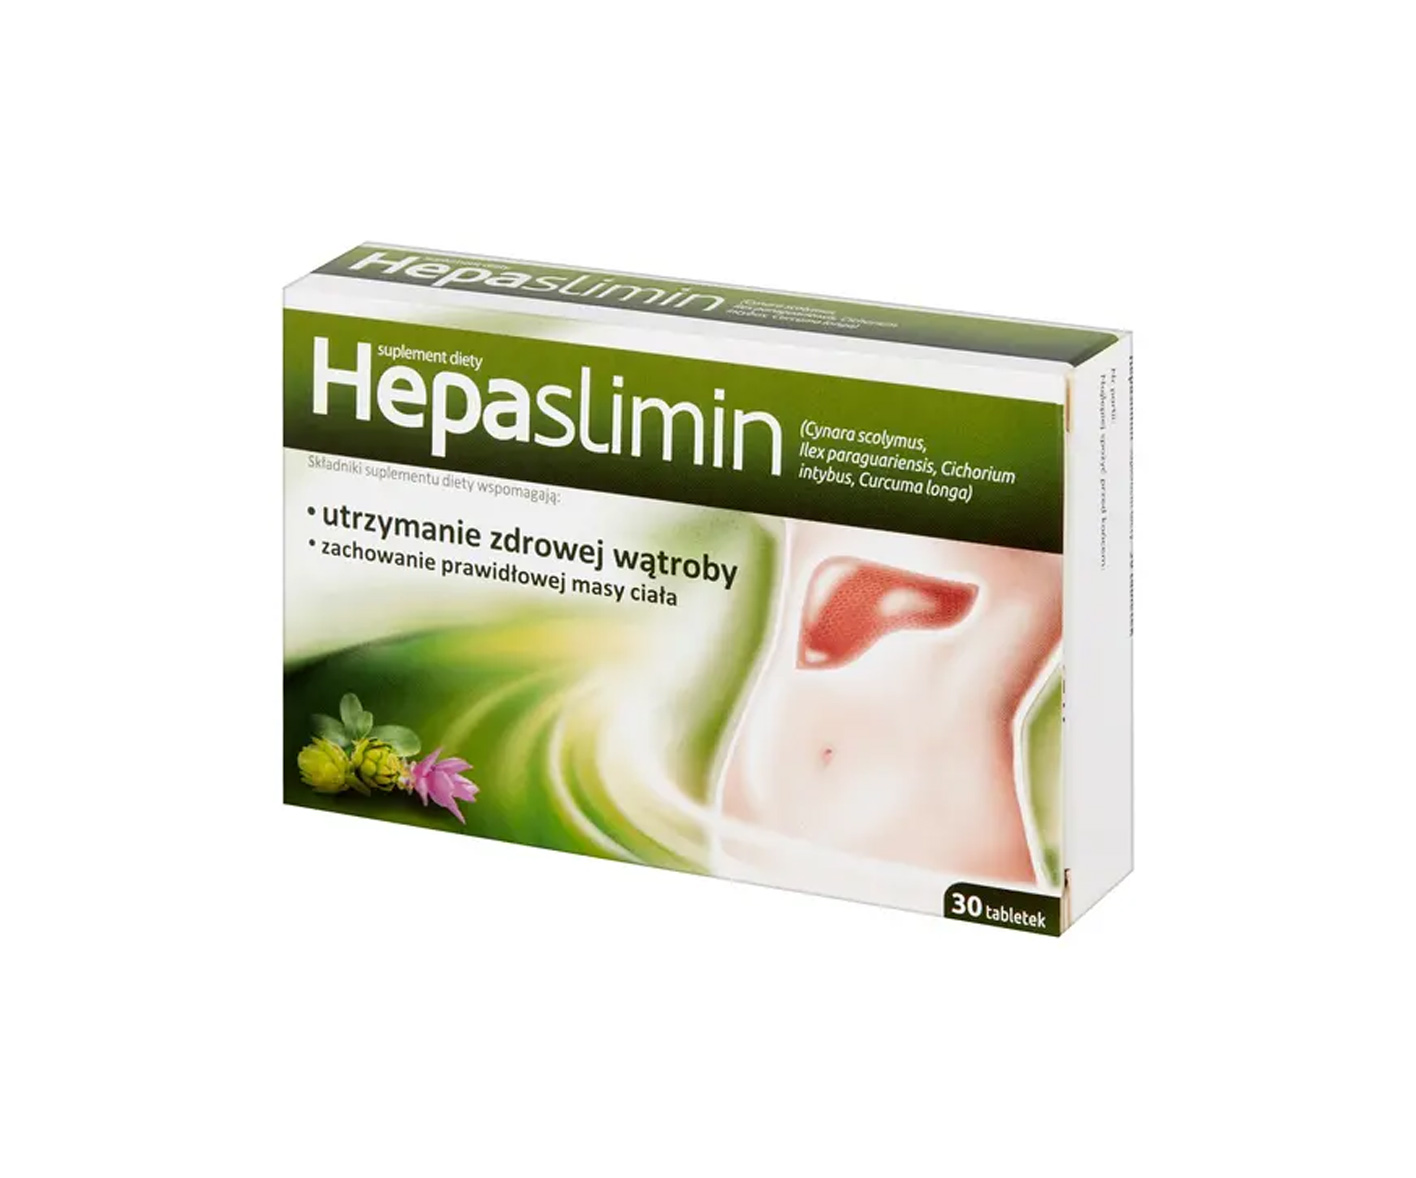 AFLOFARM, Hepaslimin, tabletki na wątrobę